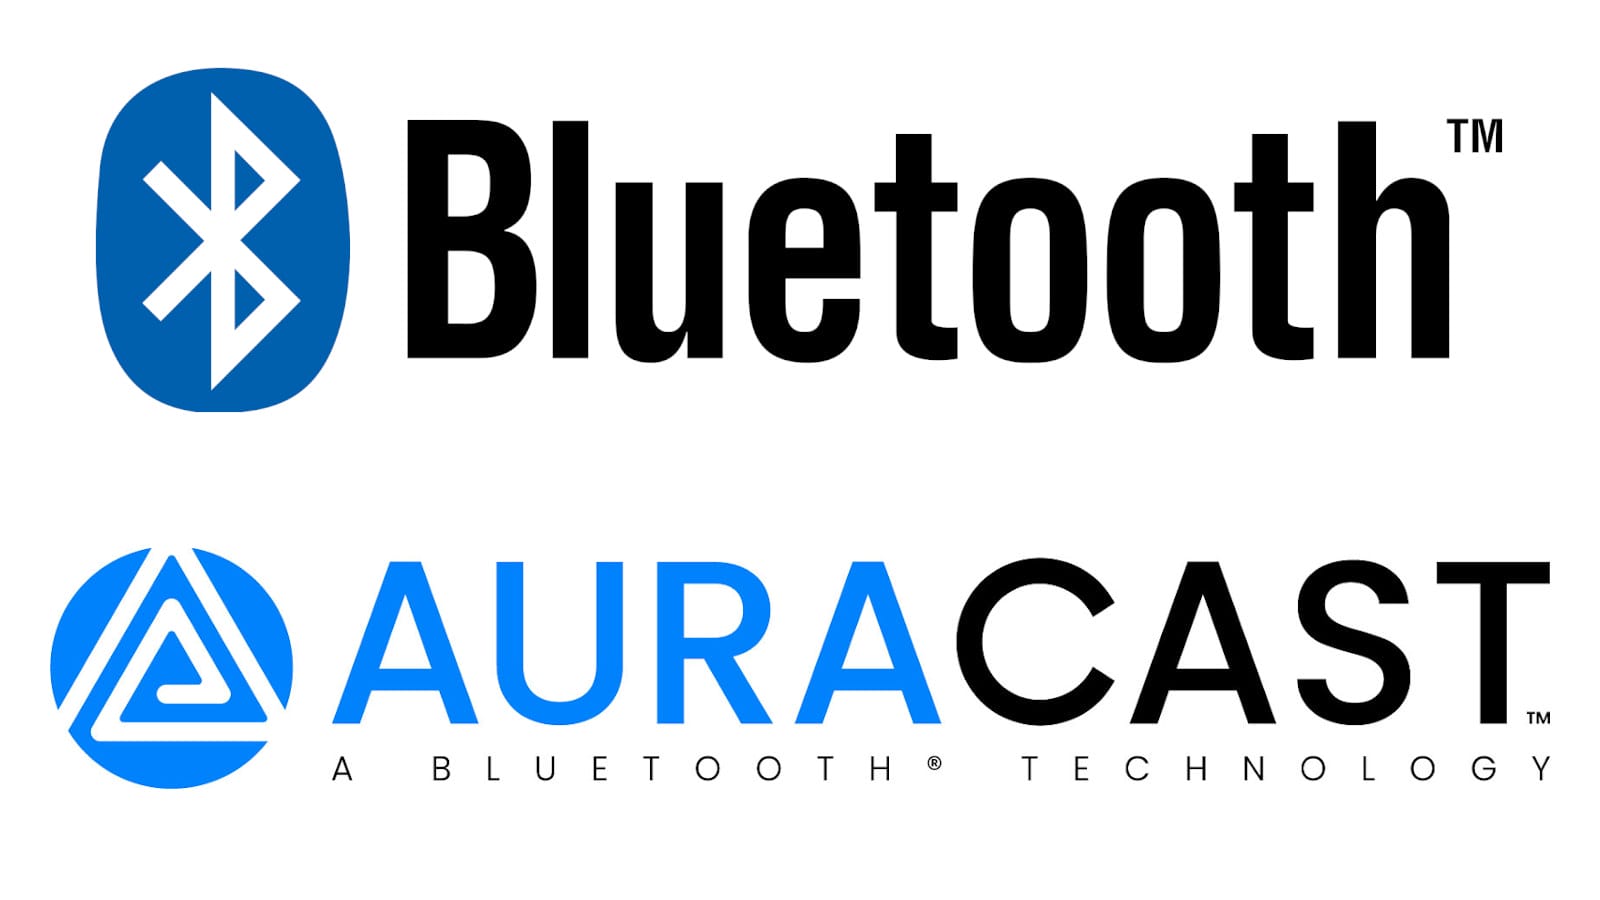 Bluetooth Auracast